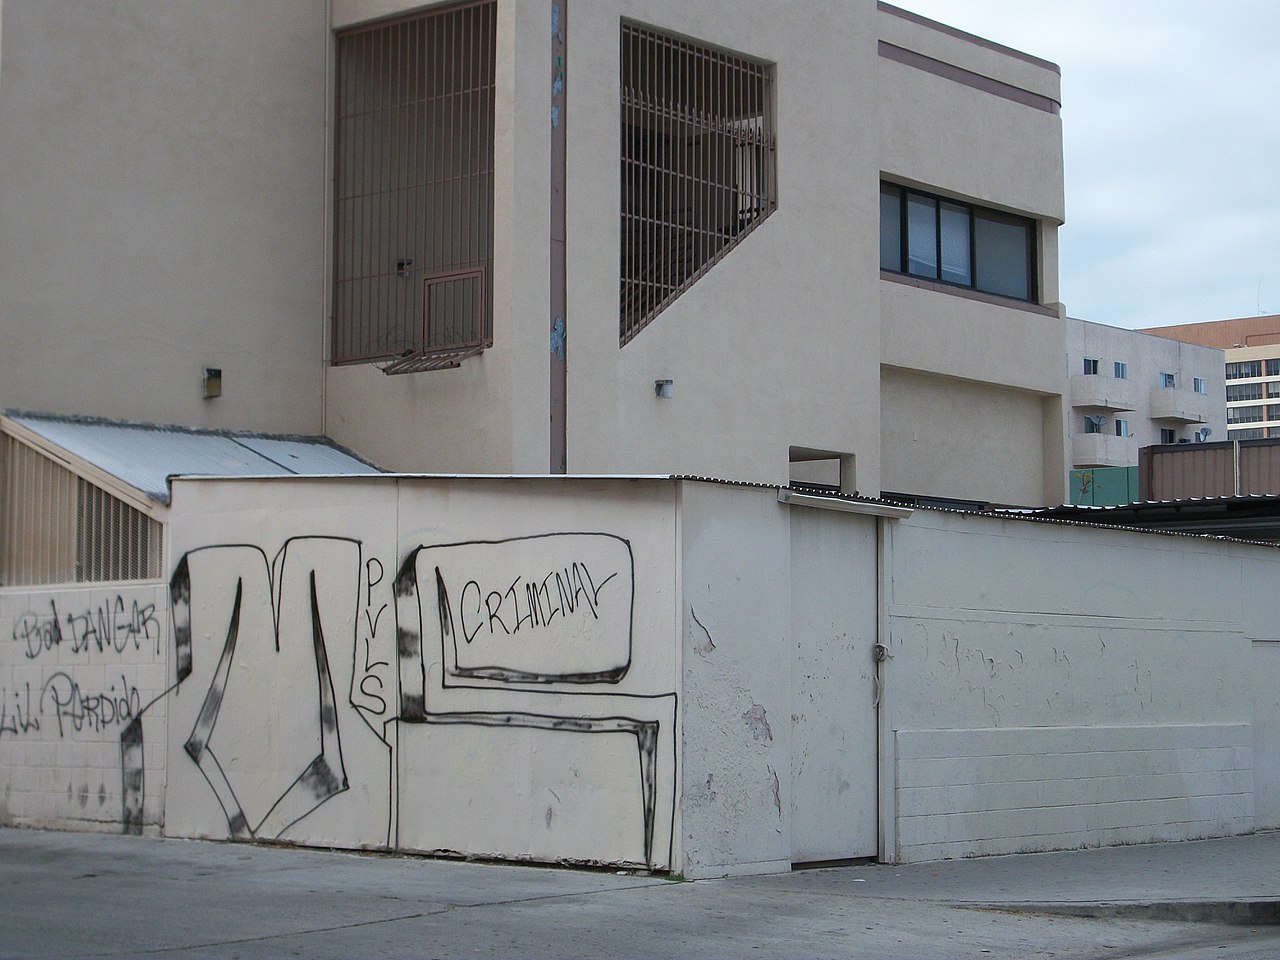 MS-13 graffiti in Los Angeles.